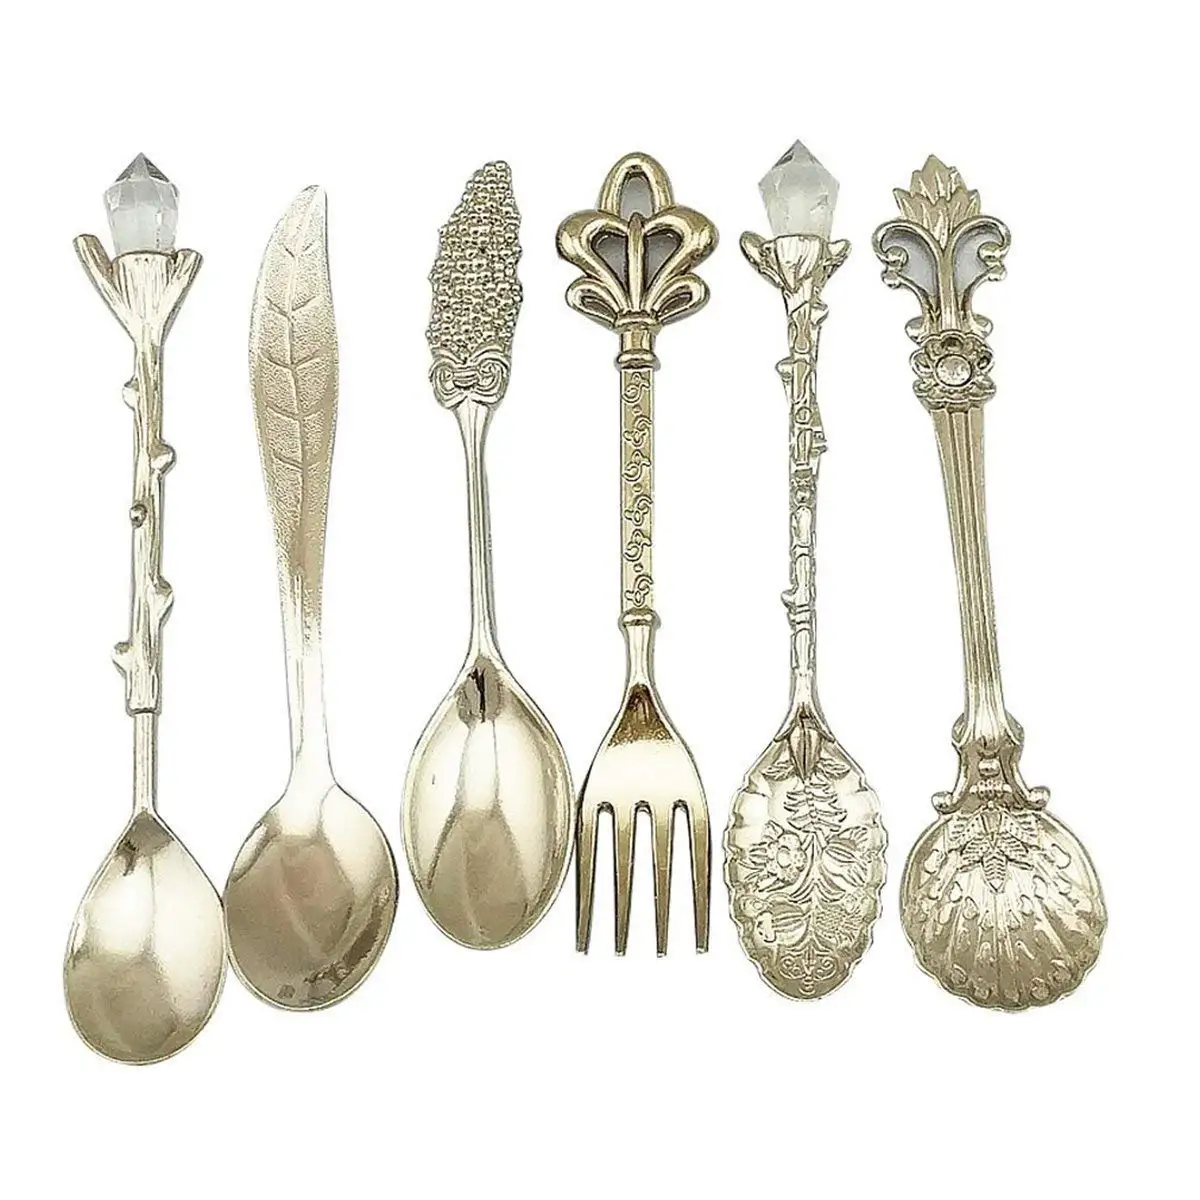 Yalulu 4 Pcs//Set Vintage Royal Style Crystal Head Design Small Coffee Tea Spoon Ice Cream Spoons Kitchen Dining Bar Tools